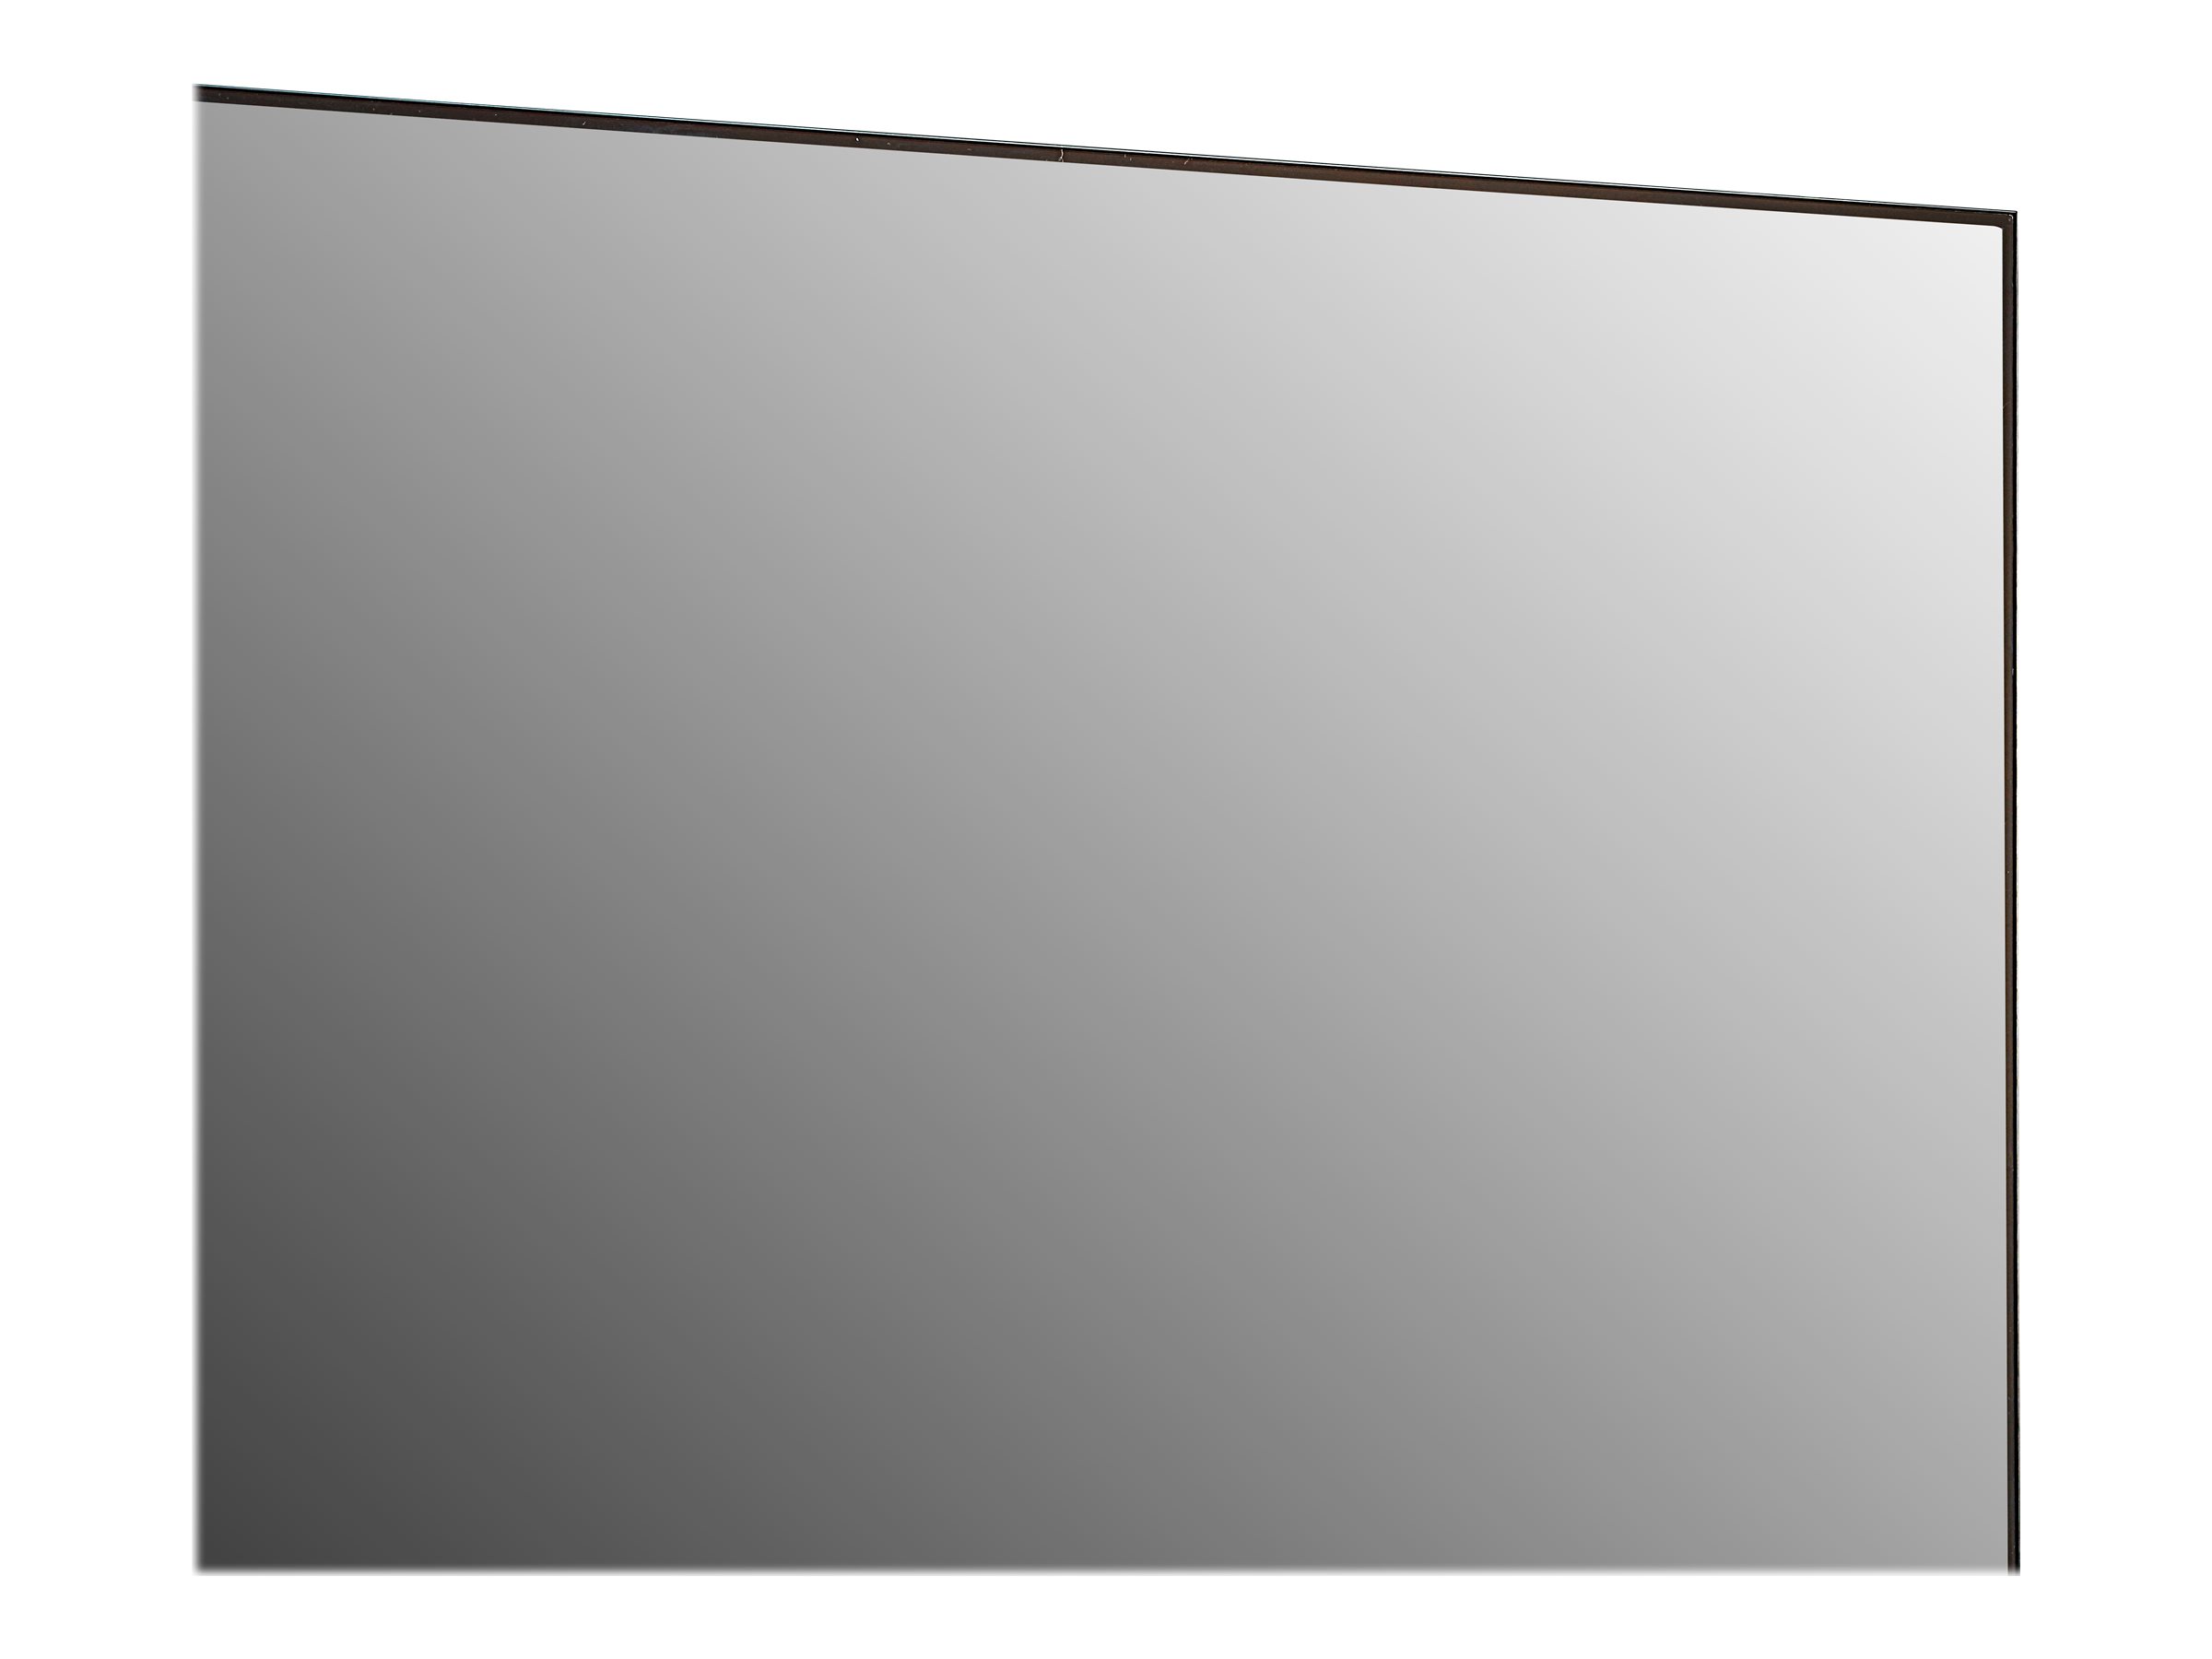 LG Wallpaper 55EJ5E - 55" Diagonal Class EJ5E Series OLED display - digital signage - 1080p (Full HD) 1920 x 1080 - black - image 3 of 7